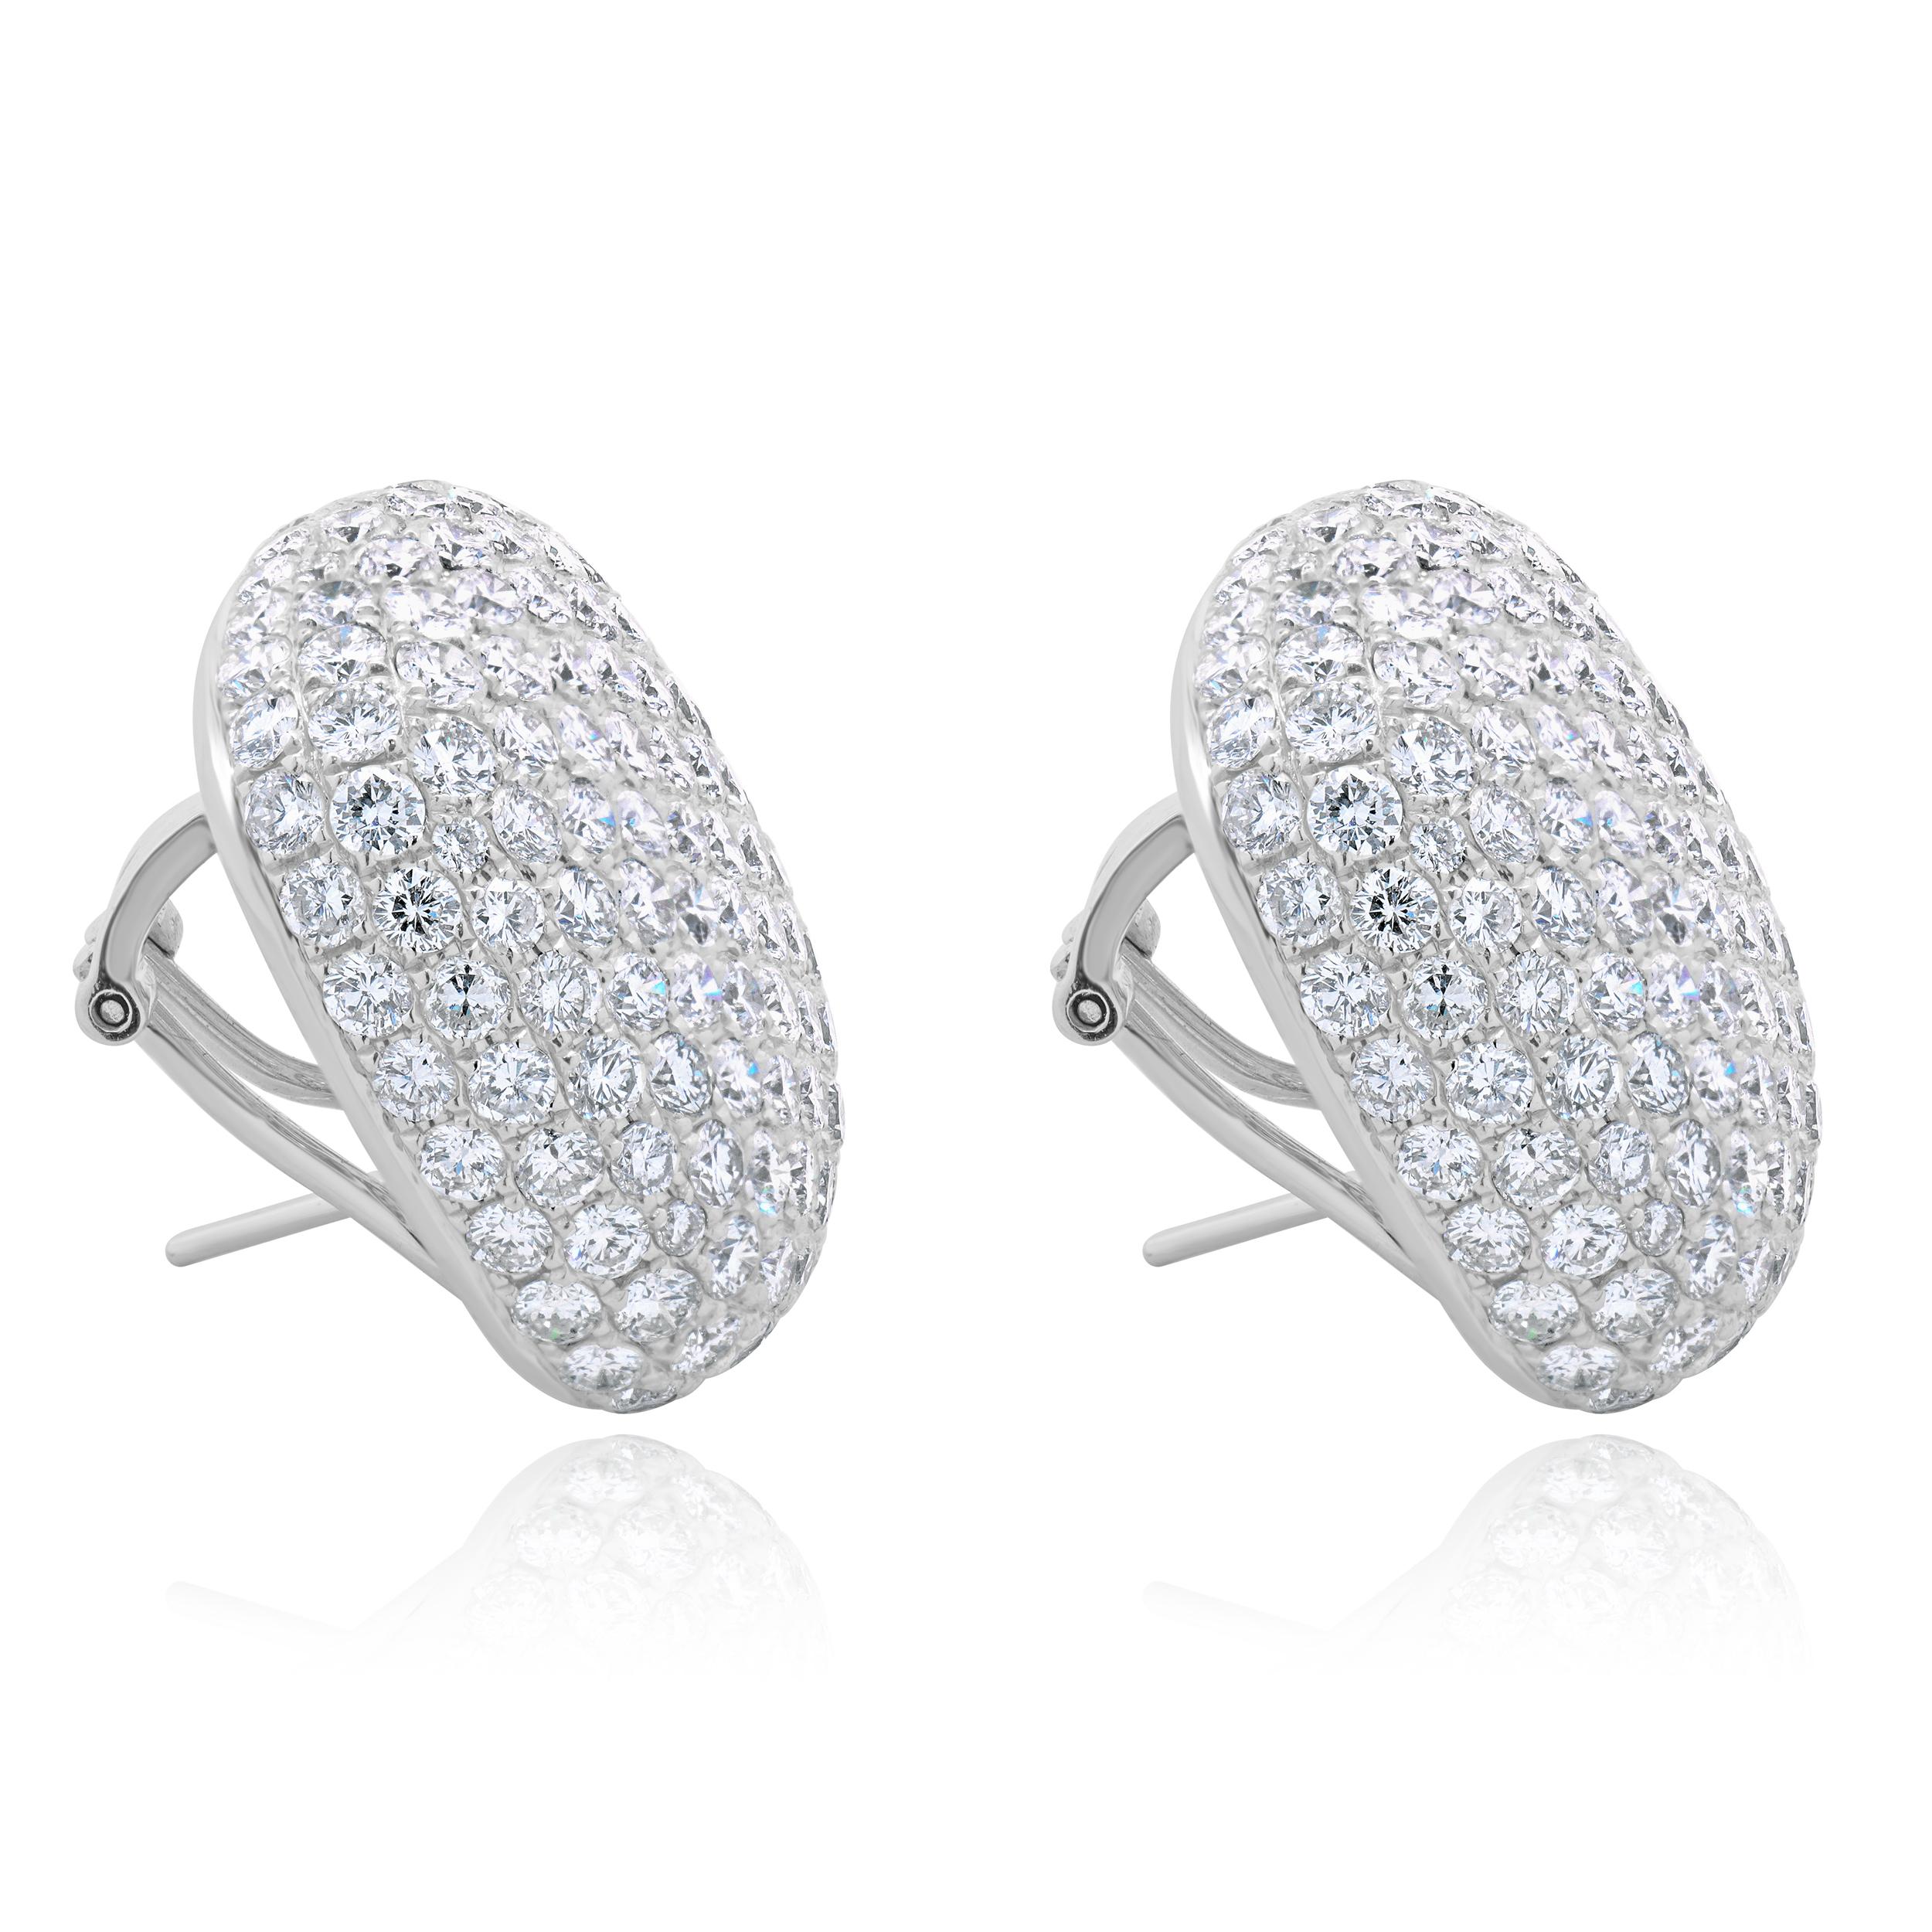 Designer: custom design
Material: 18K white gold
Diamonds: 579 round brilliant cut = 13.65cttw
Color: G
Clarity: VS1-2
Dimensions: earrings measure 22 x 22mm 
Weight: 18.35 grams
